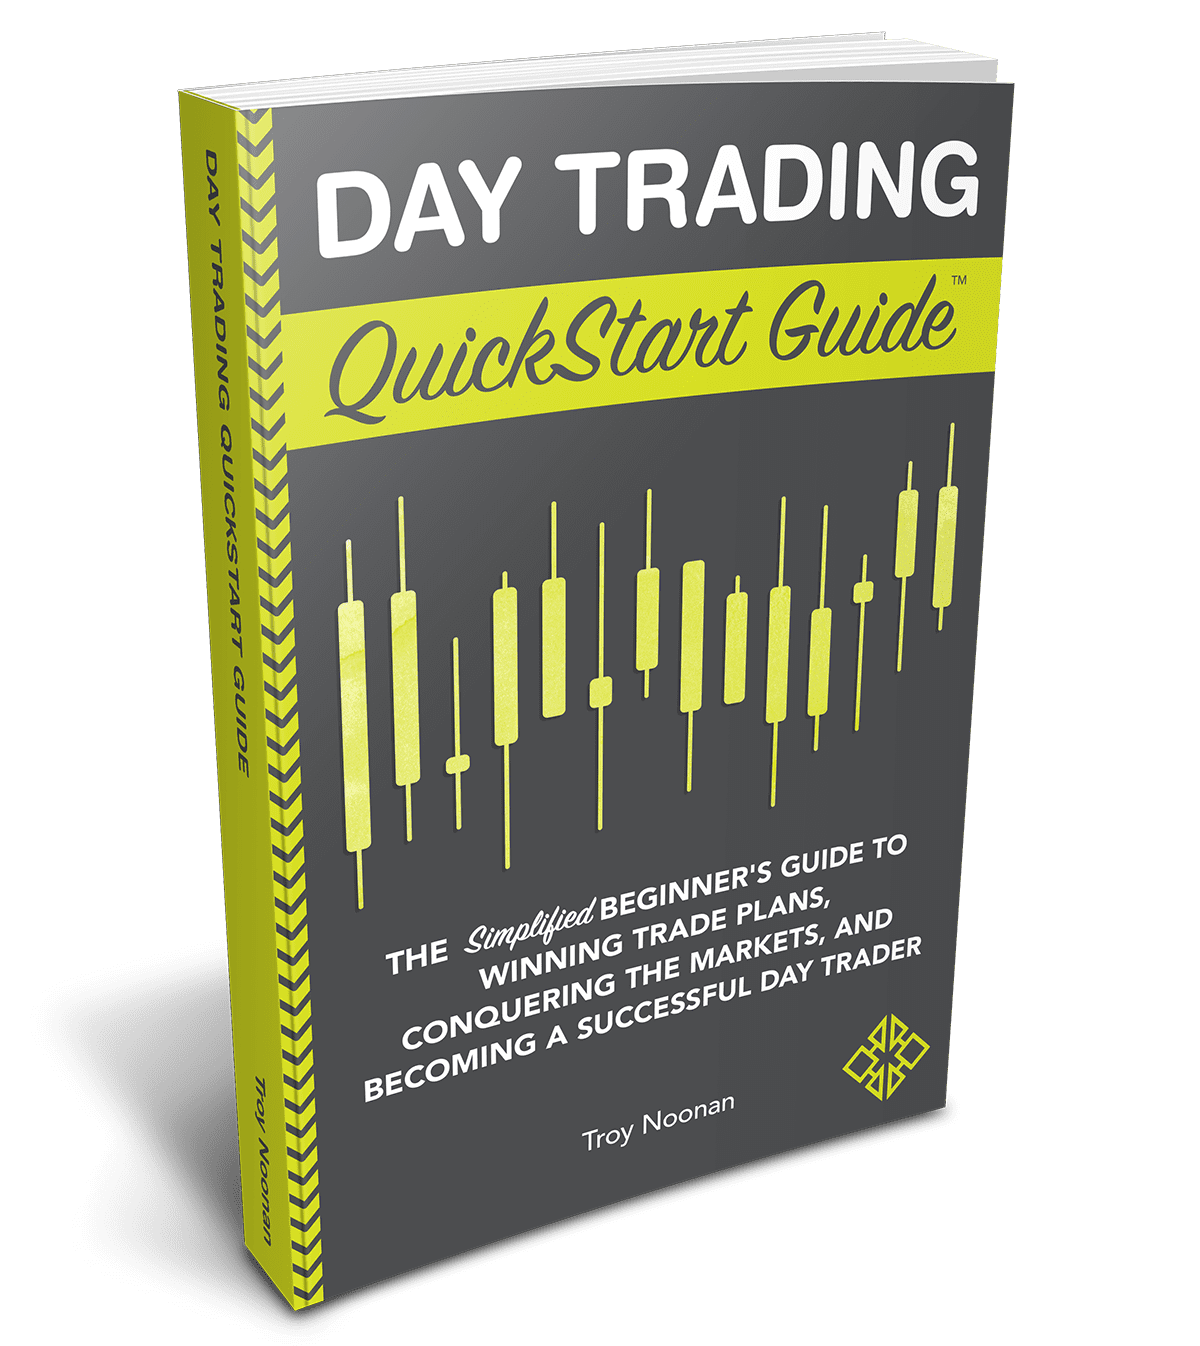 Day Trading QuickStart Guide by veteran trader Troy Noonan